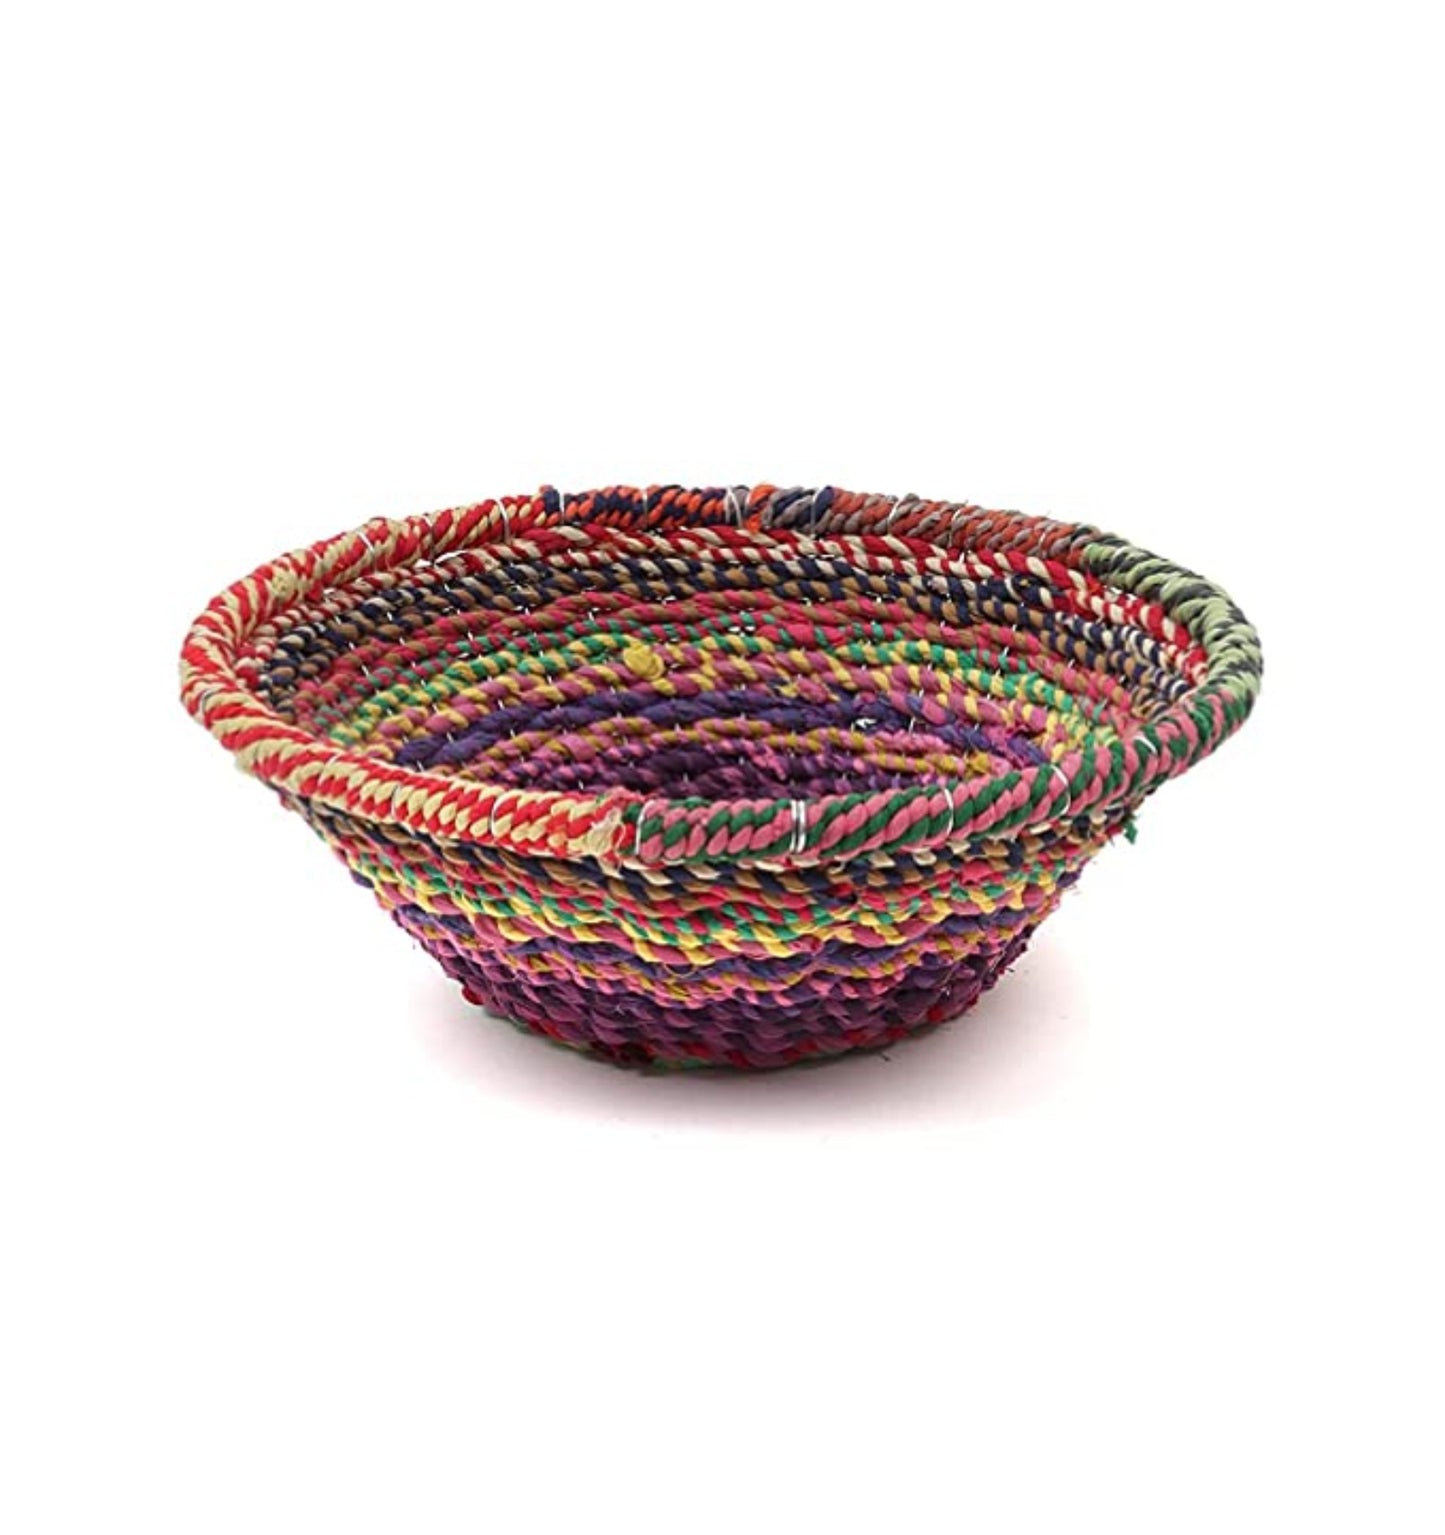 Multicolor Cotton Rope Basket 28L x 16W x 12H Cm Small